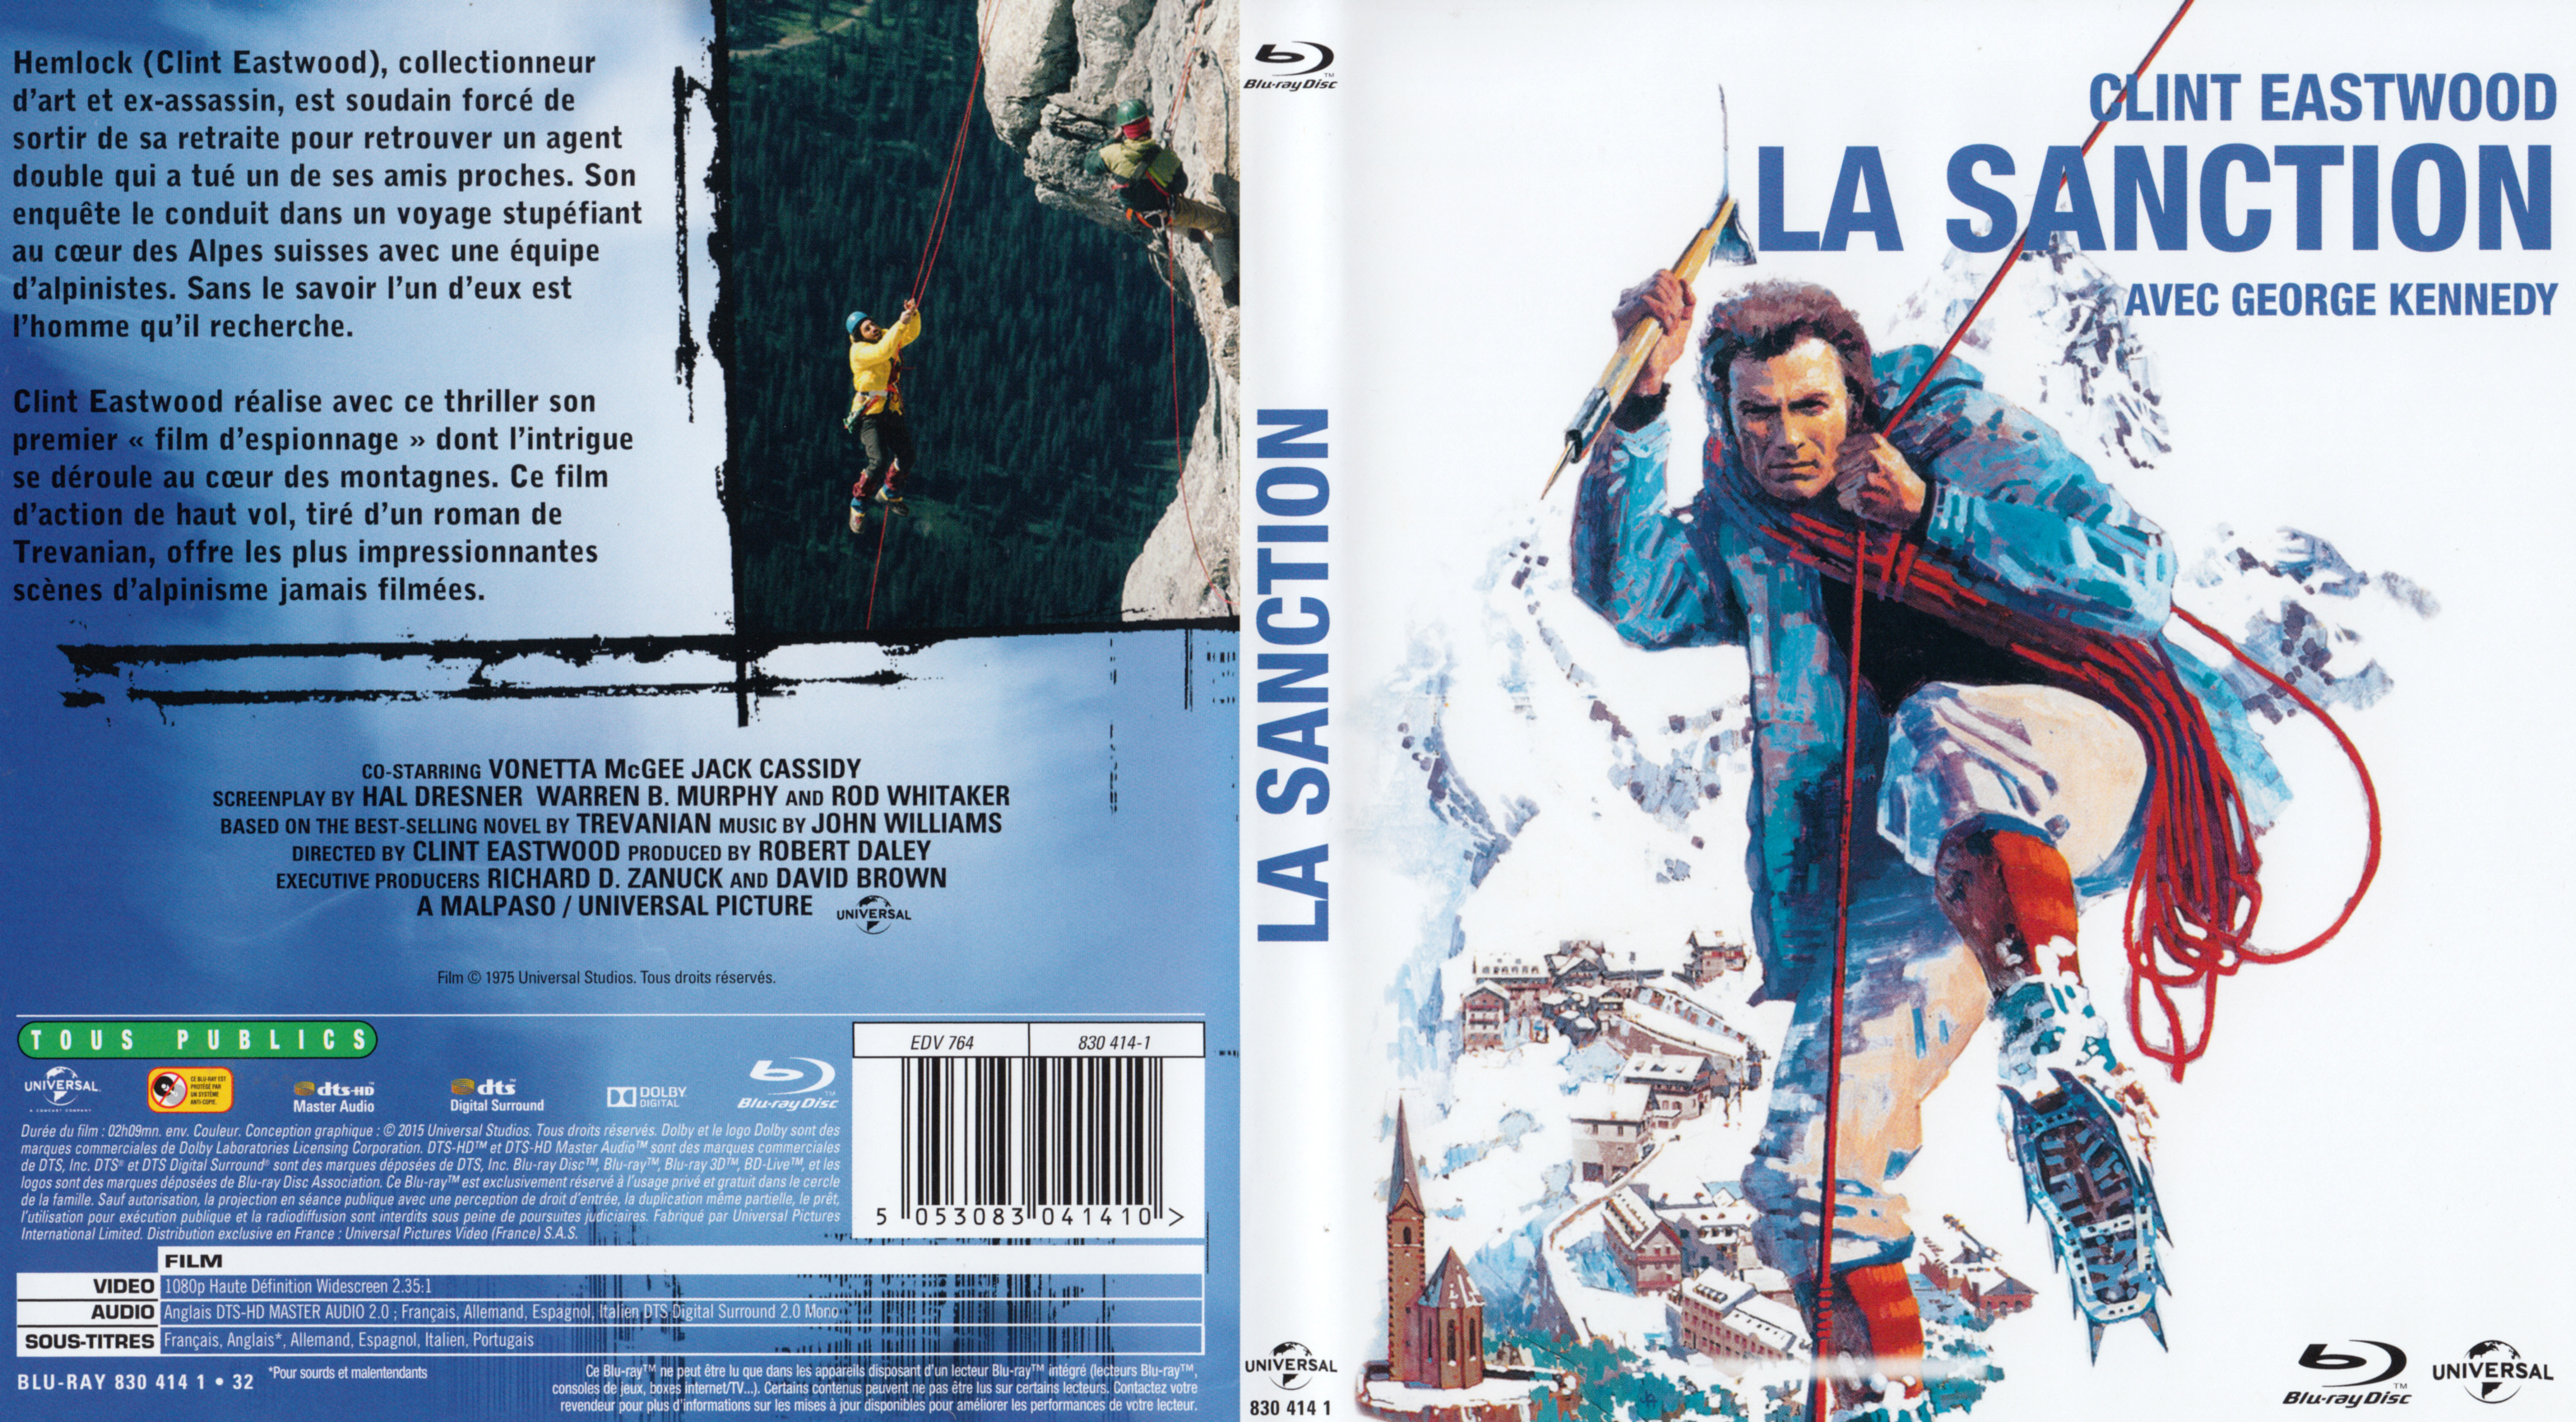 Jaquette DVD La sanction (BLU-RAY) v2